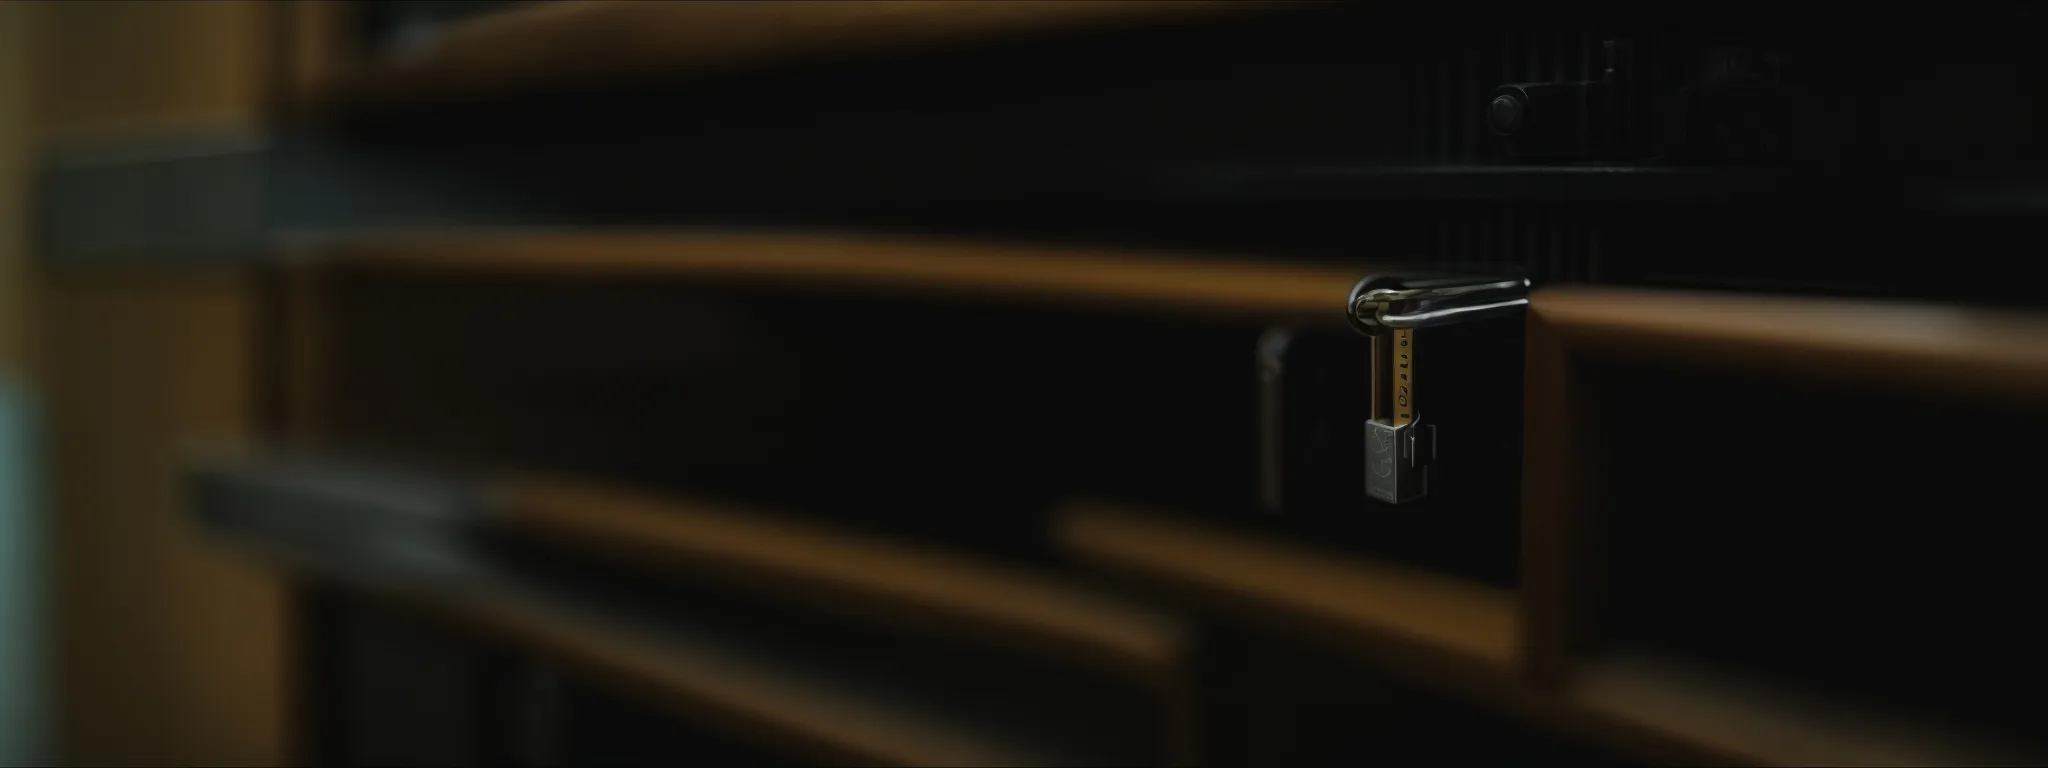 a padlock secured on a server rack.